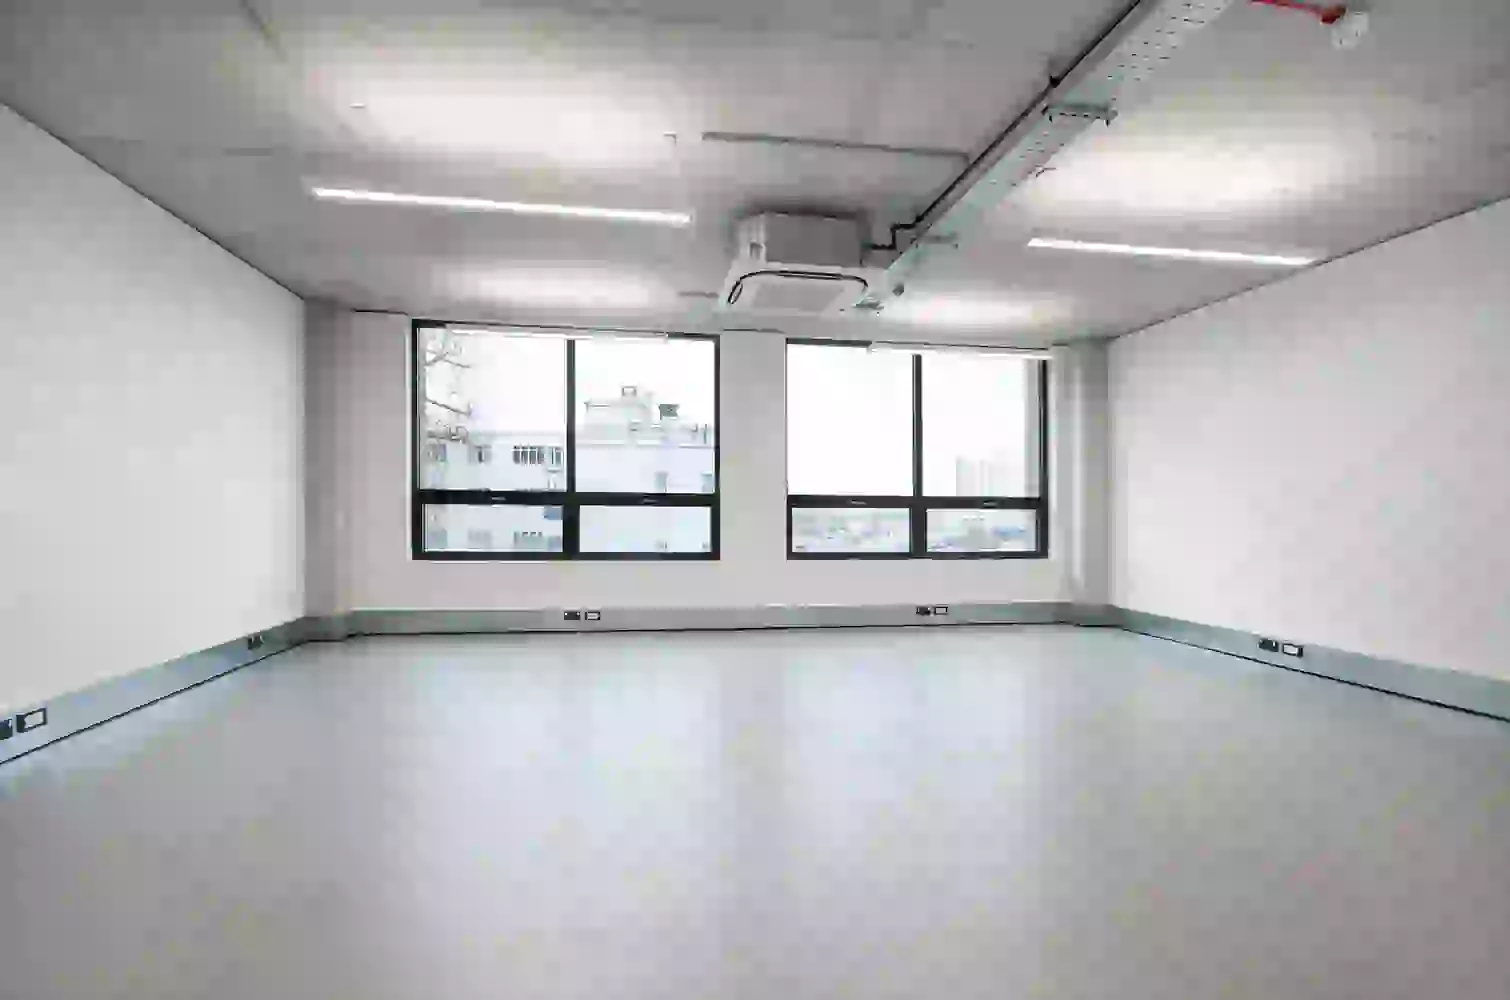 Office space to rent at Grand Union Studios, 332 Ladbroke Grove, London, unit GU.2.16, 580 sq ft (53 sq m).